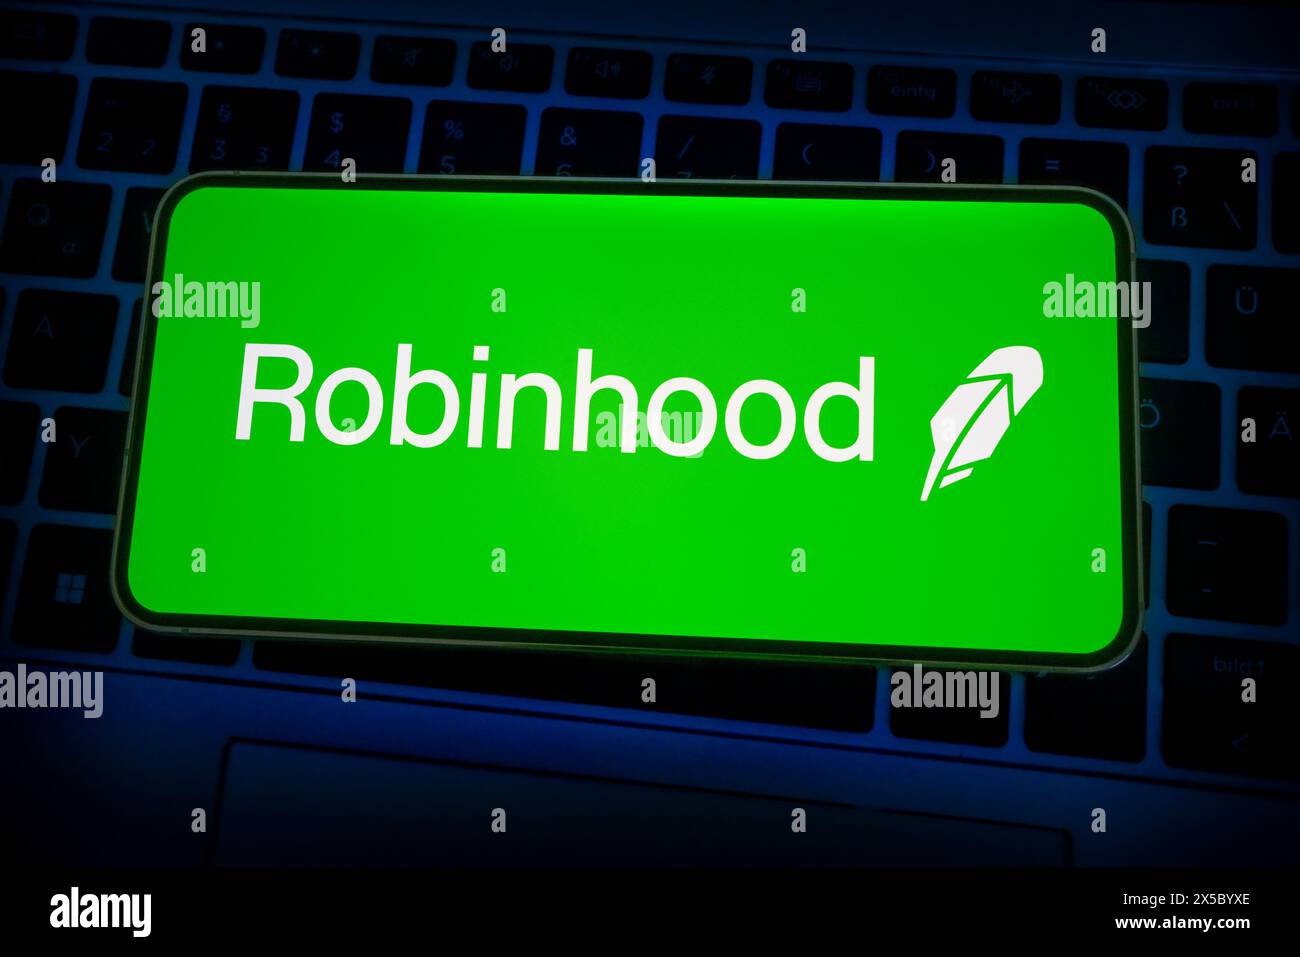 Robinhood Markets displayed on mobile device Stock Photo